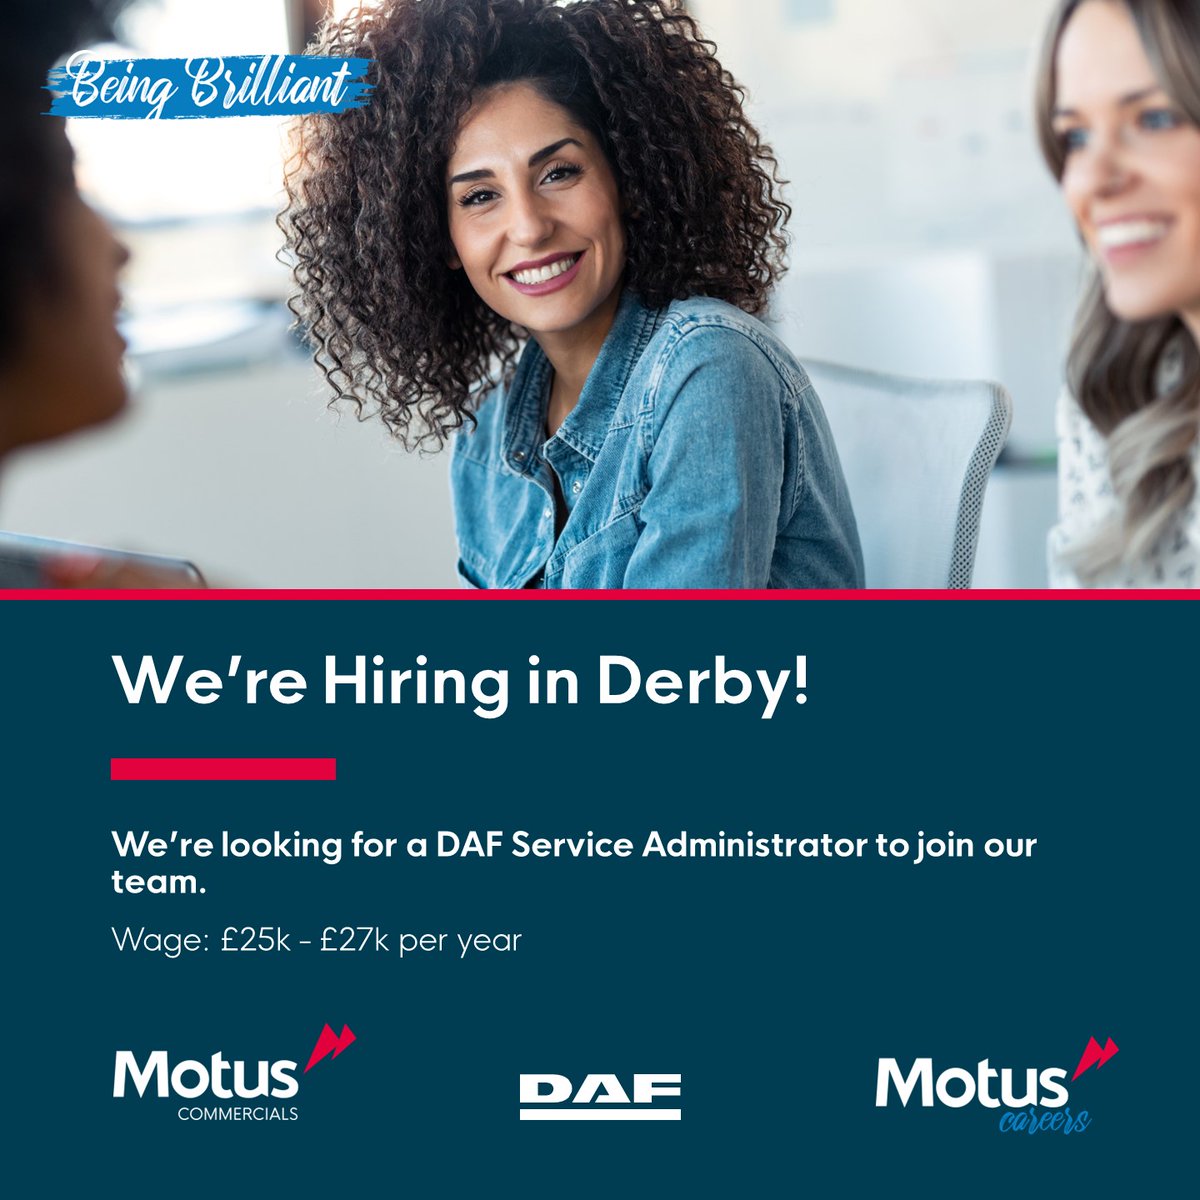 ⭐𝗪𝗲’𝗿𝗲 𝗹𝗼𝗼𝗸𝗶𝗻𝗴 𝗳𝗼𝗿 𝗮 𝗦𝗲𝗿𝘃𝗶𝗰𝗲 𝗔𝗱𝗺𝗶𝗻 𝗶𝗻 #𝗗𝗲𝗿𝗯𝘆⭐

APPLY NOW ➡️ indeedhi.re/40cACuh

#Jobs #JobSearch #JobAlert #Hiring #Careers #Derbyshire #DerbyJobs #DerbyshireJobs #Admin #AdminJobs #TeamMotus #MotusCommercials #MotusCommercialsCareers